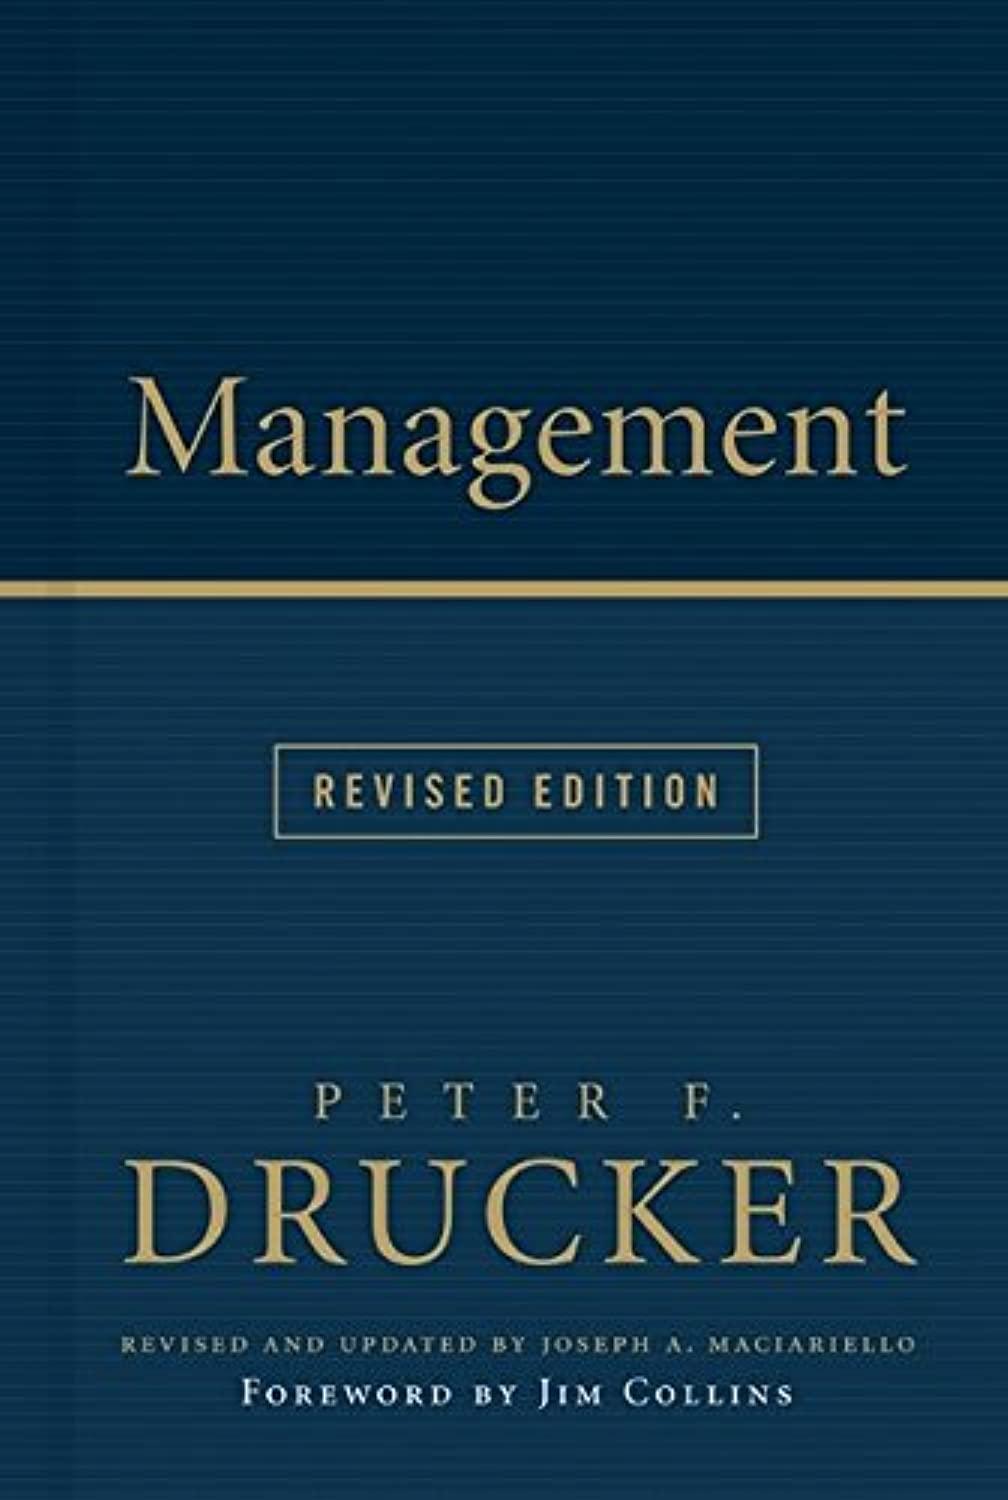 management revised edition peter f. drucker 0061252662, 978-0061252662